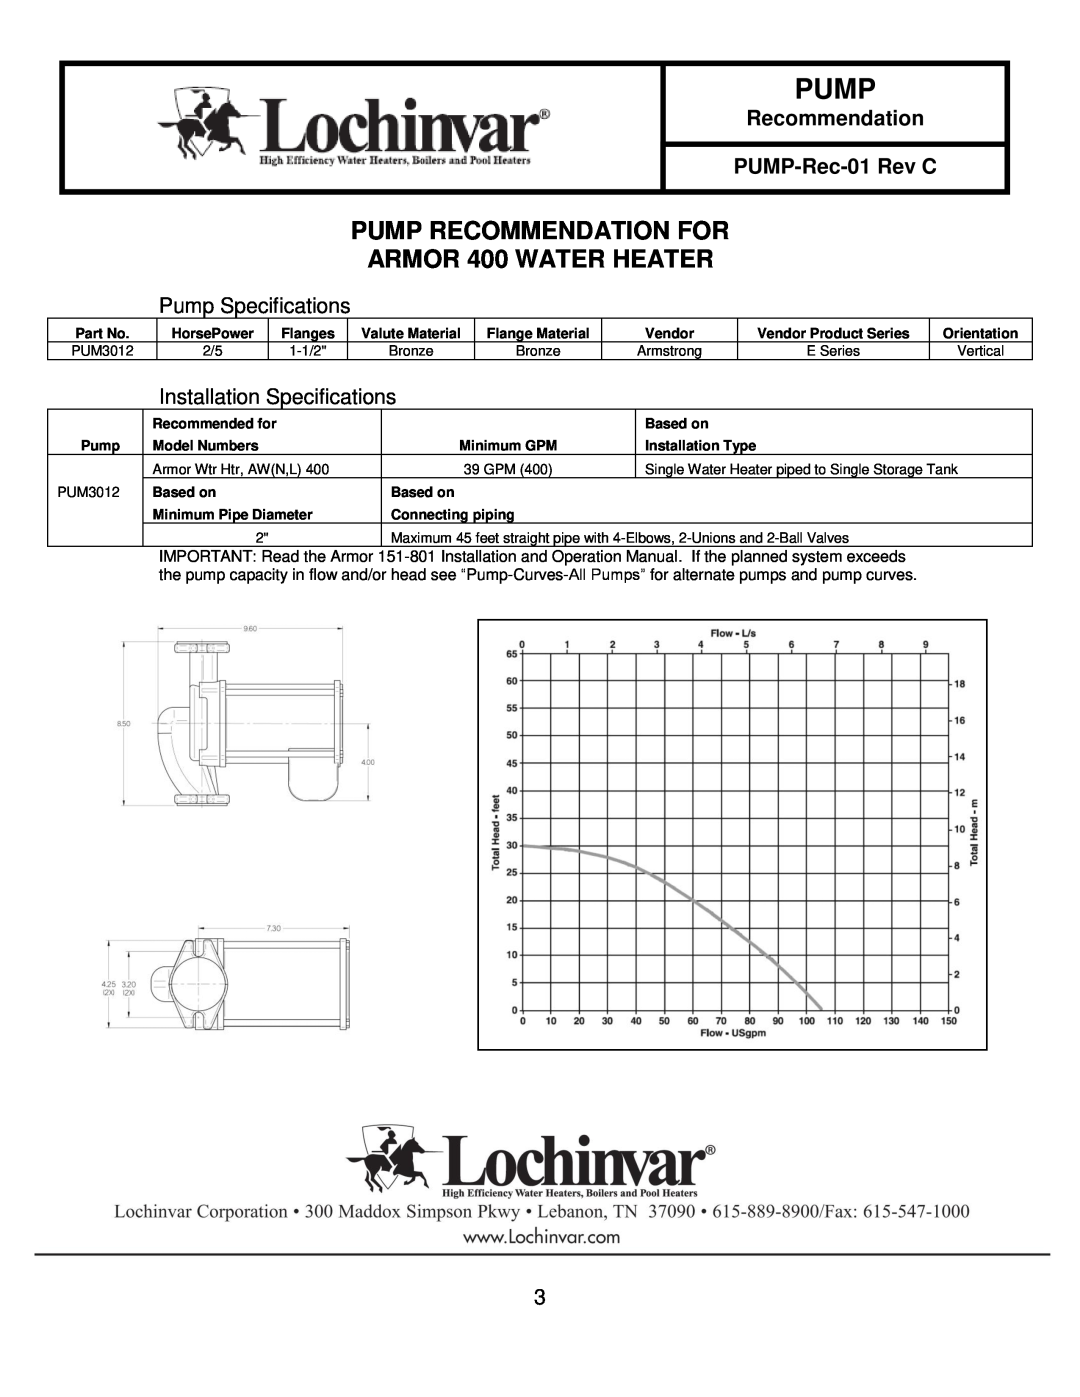 Lochinvar 151-200 ARMOR 400 WATER HEATER, Vendor, Pump Recommendation For, Pump Specifications, PUMP-Rec-01Rev C 